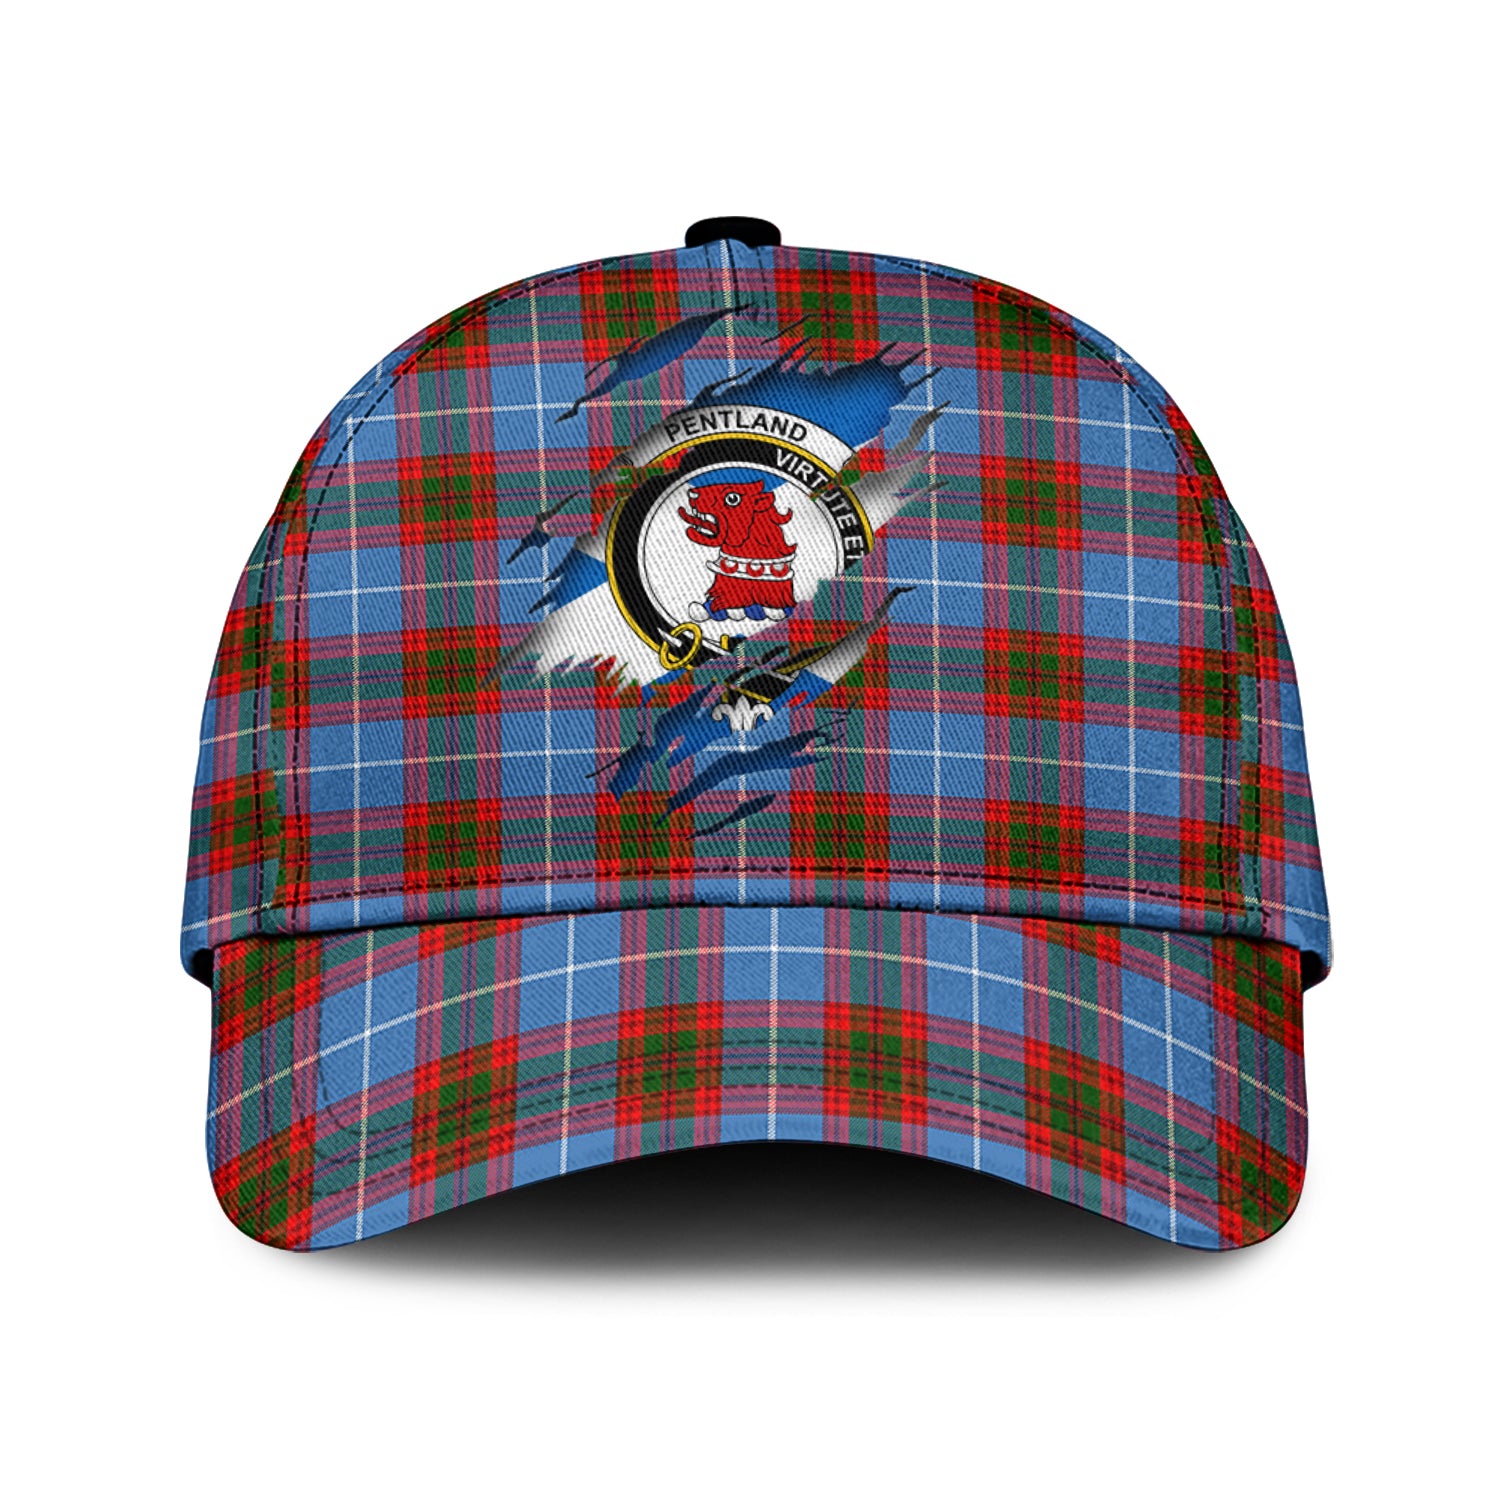 pentland-tartan-plaid-cap-family-crest-in-me-style-tartan-baseball-cap